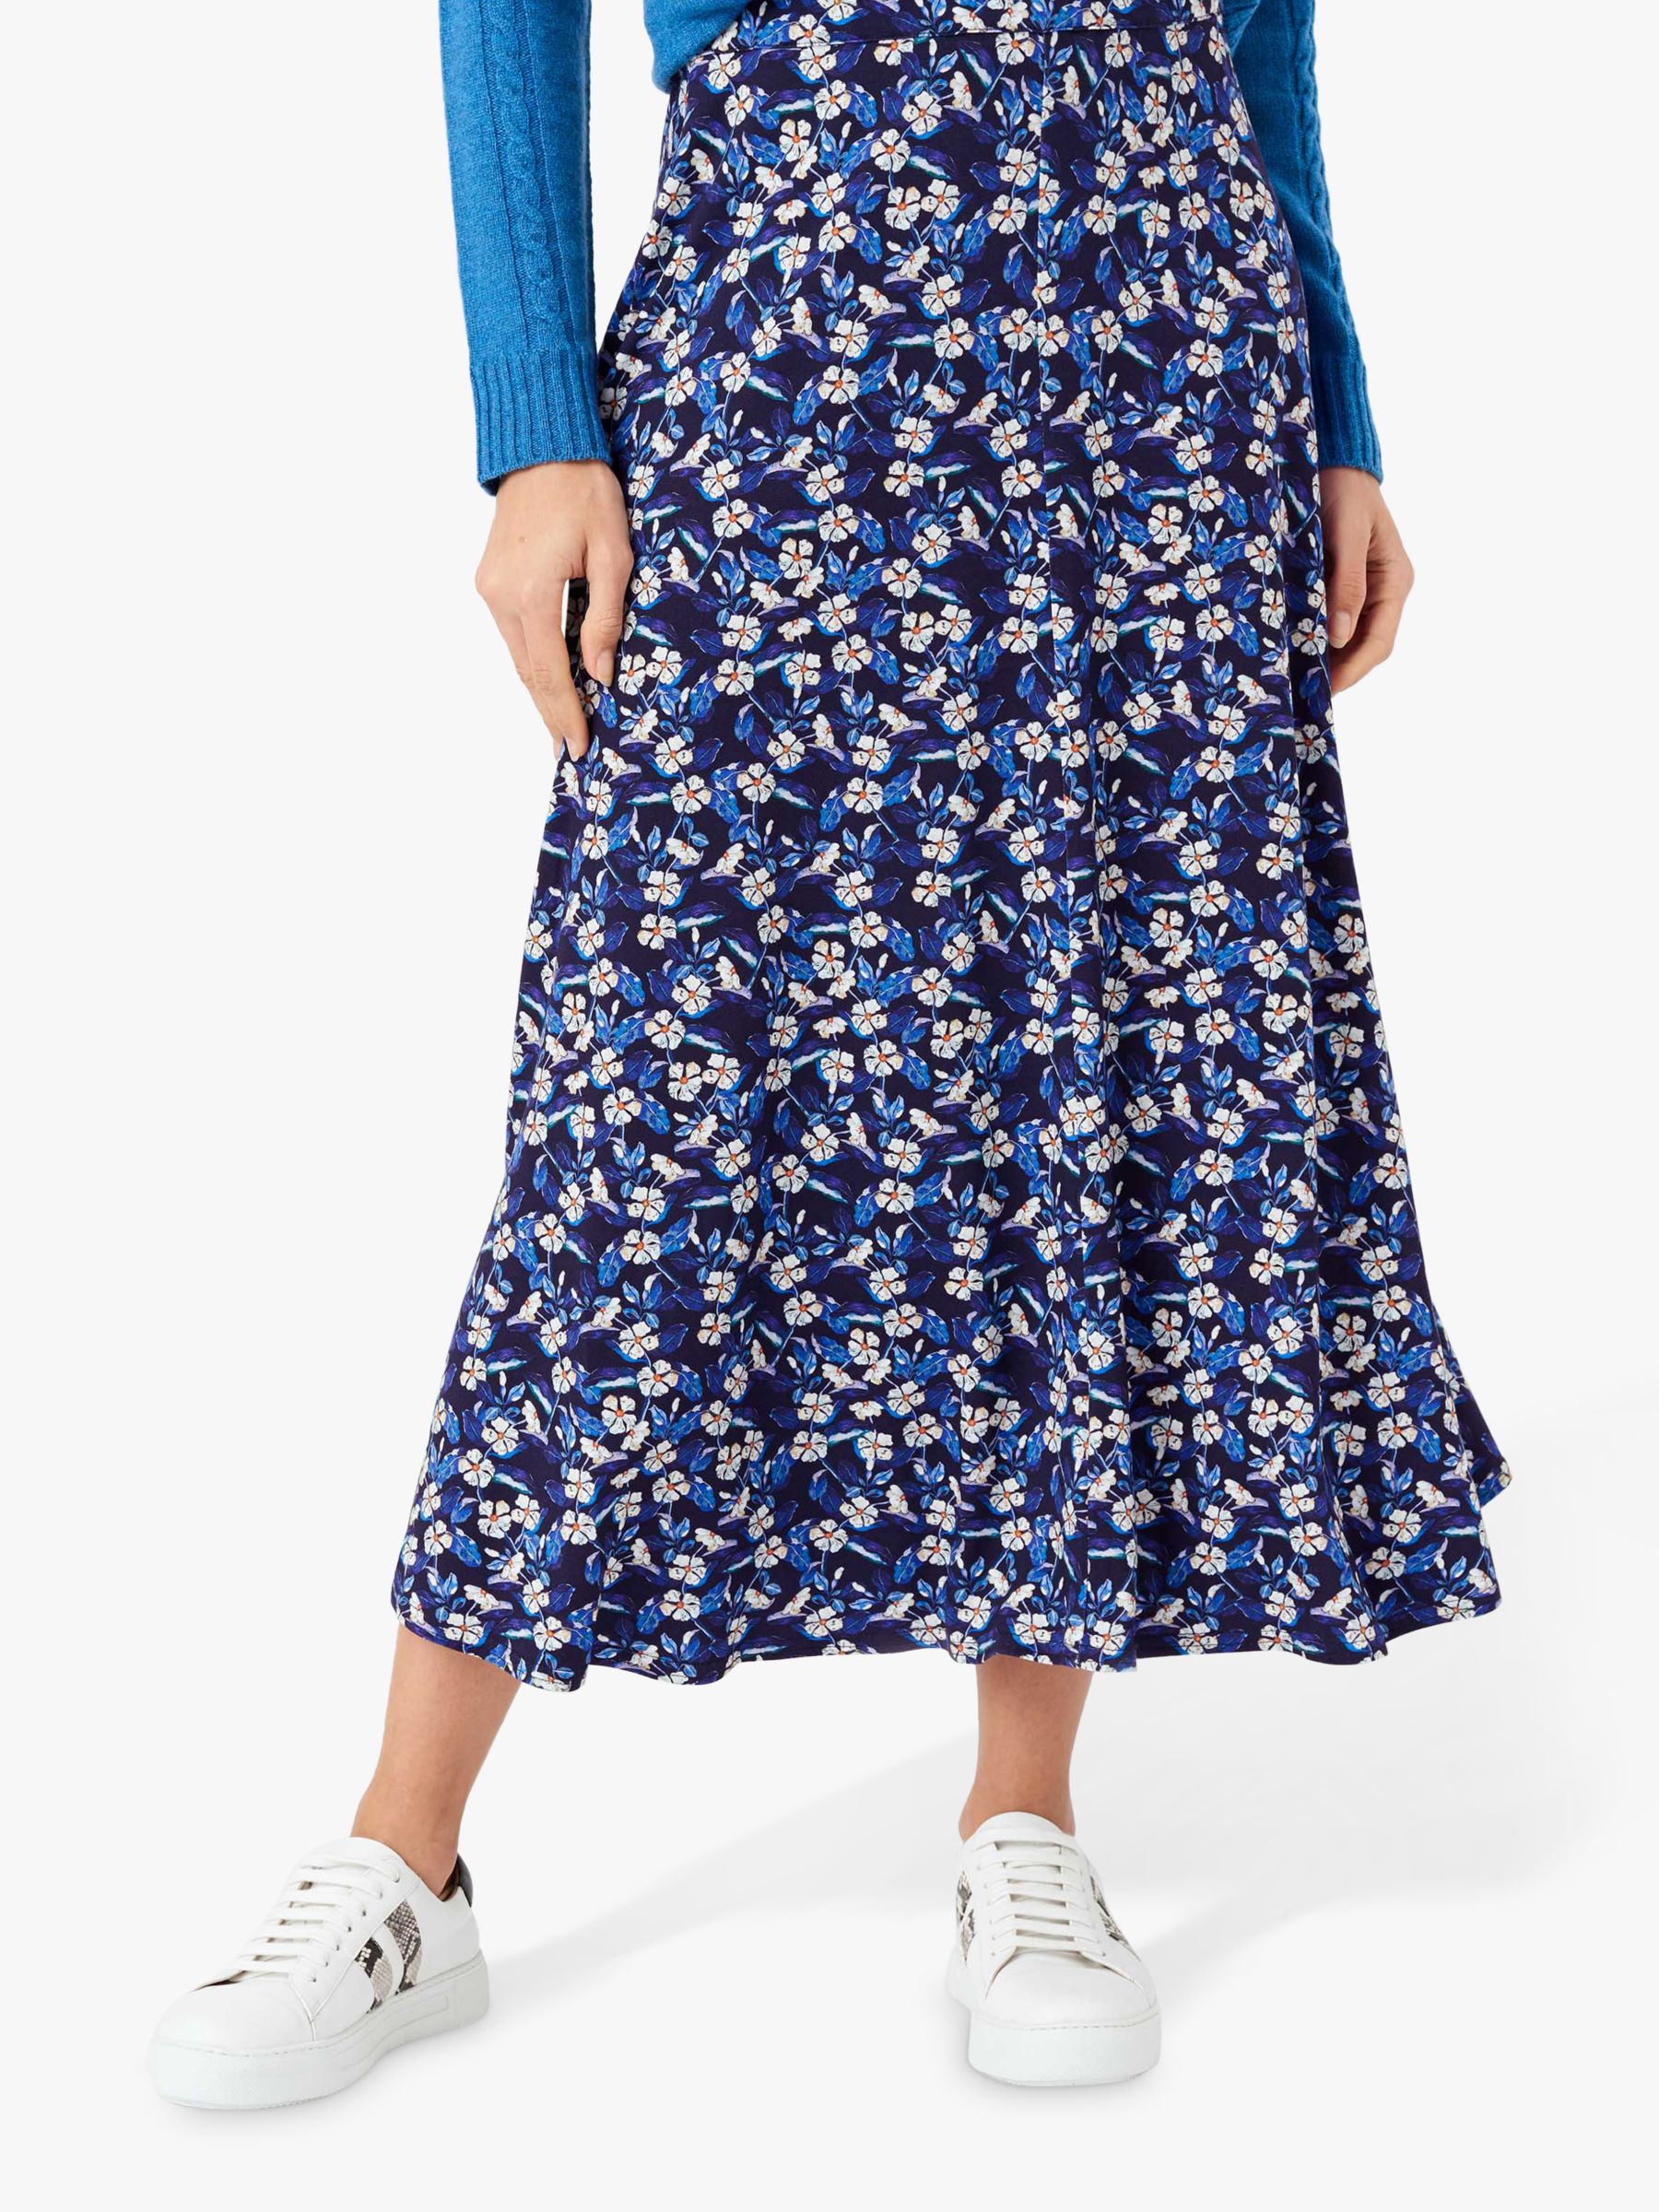 Brora Liberty Floral Print Jersey Skirt, Ink Floral